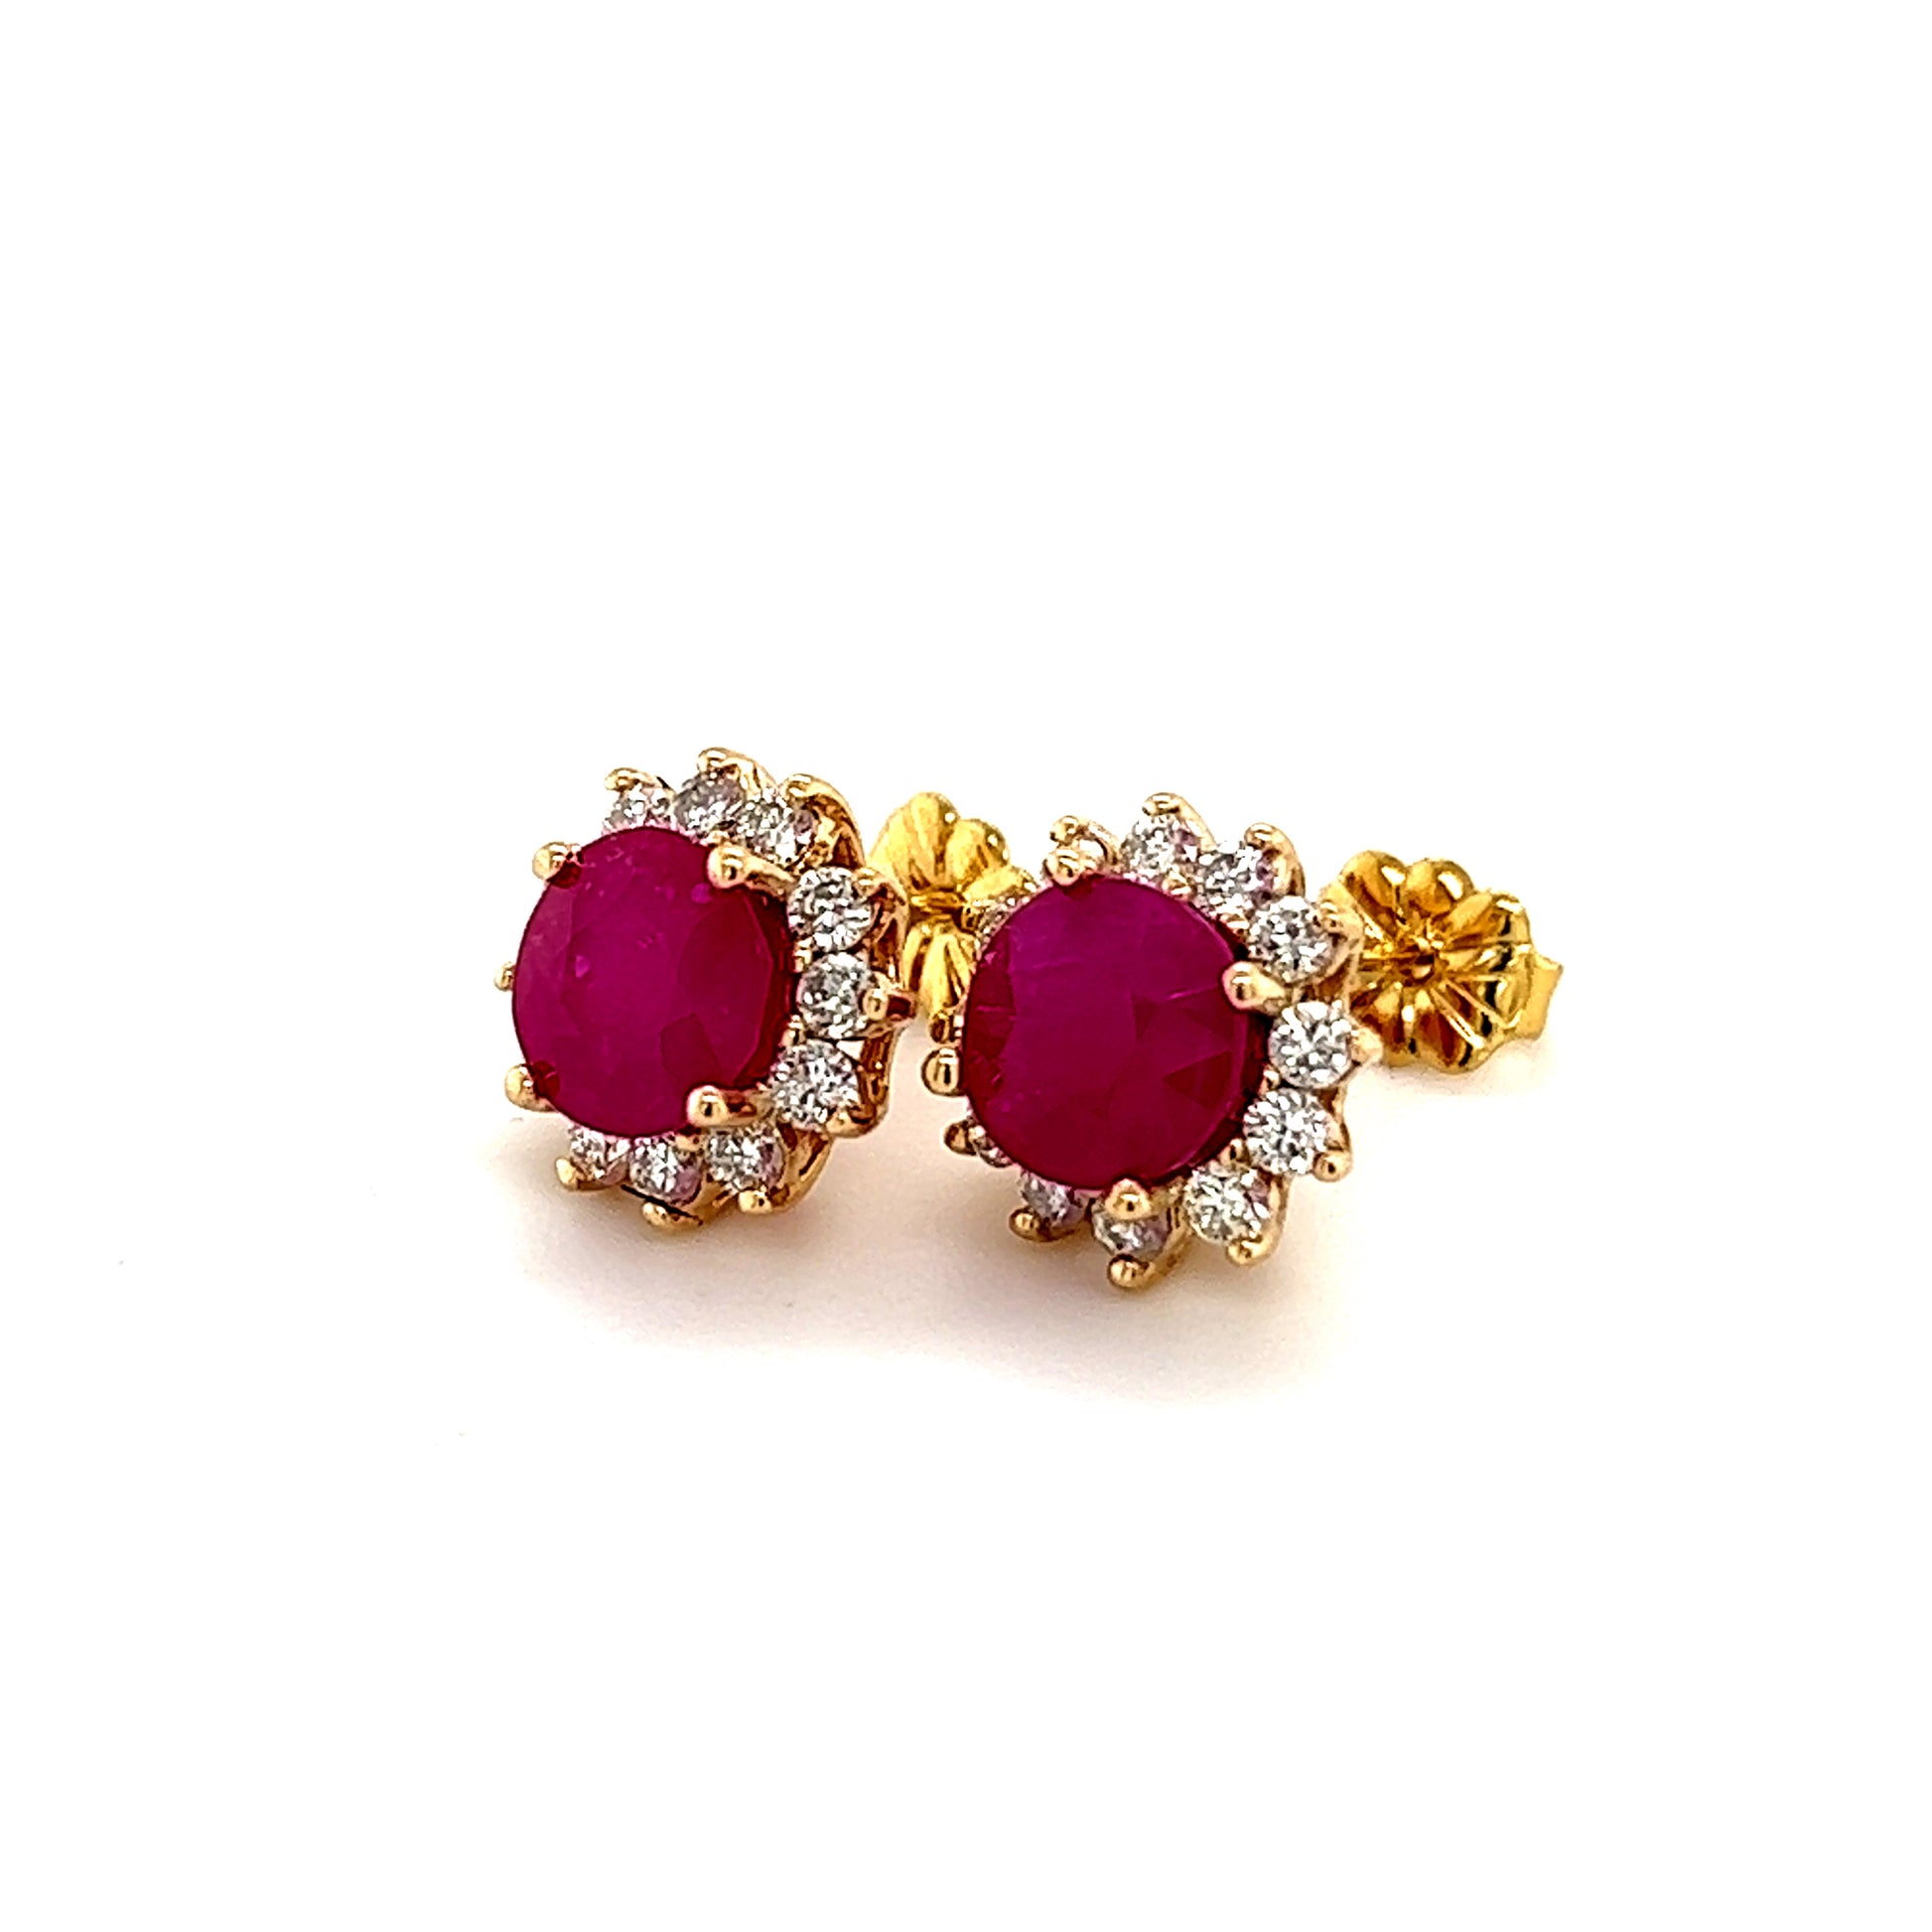 Natural Ruby Diamond Earrings 14k Gold 3.72 TCW Certified $5,950 211346 - Certified Estate Jewelry